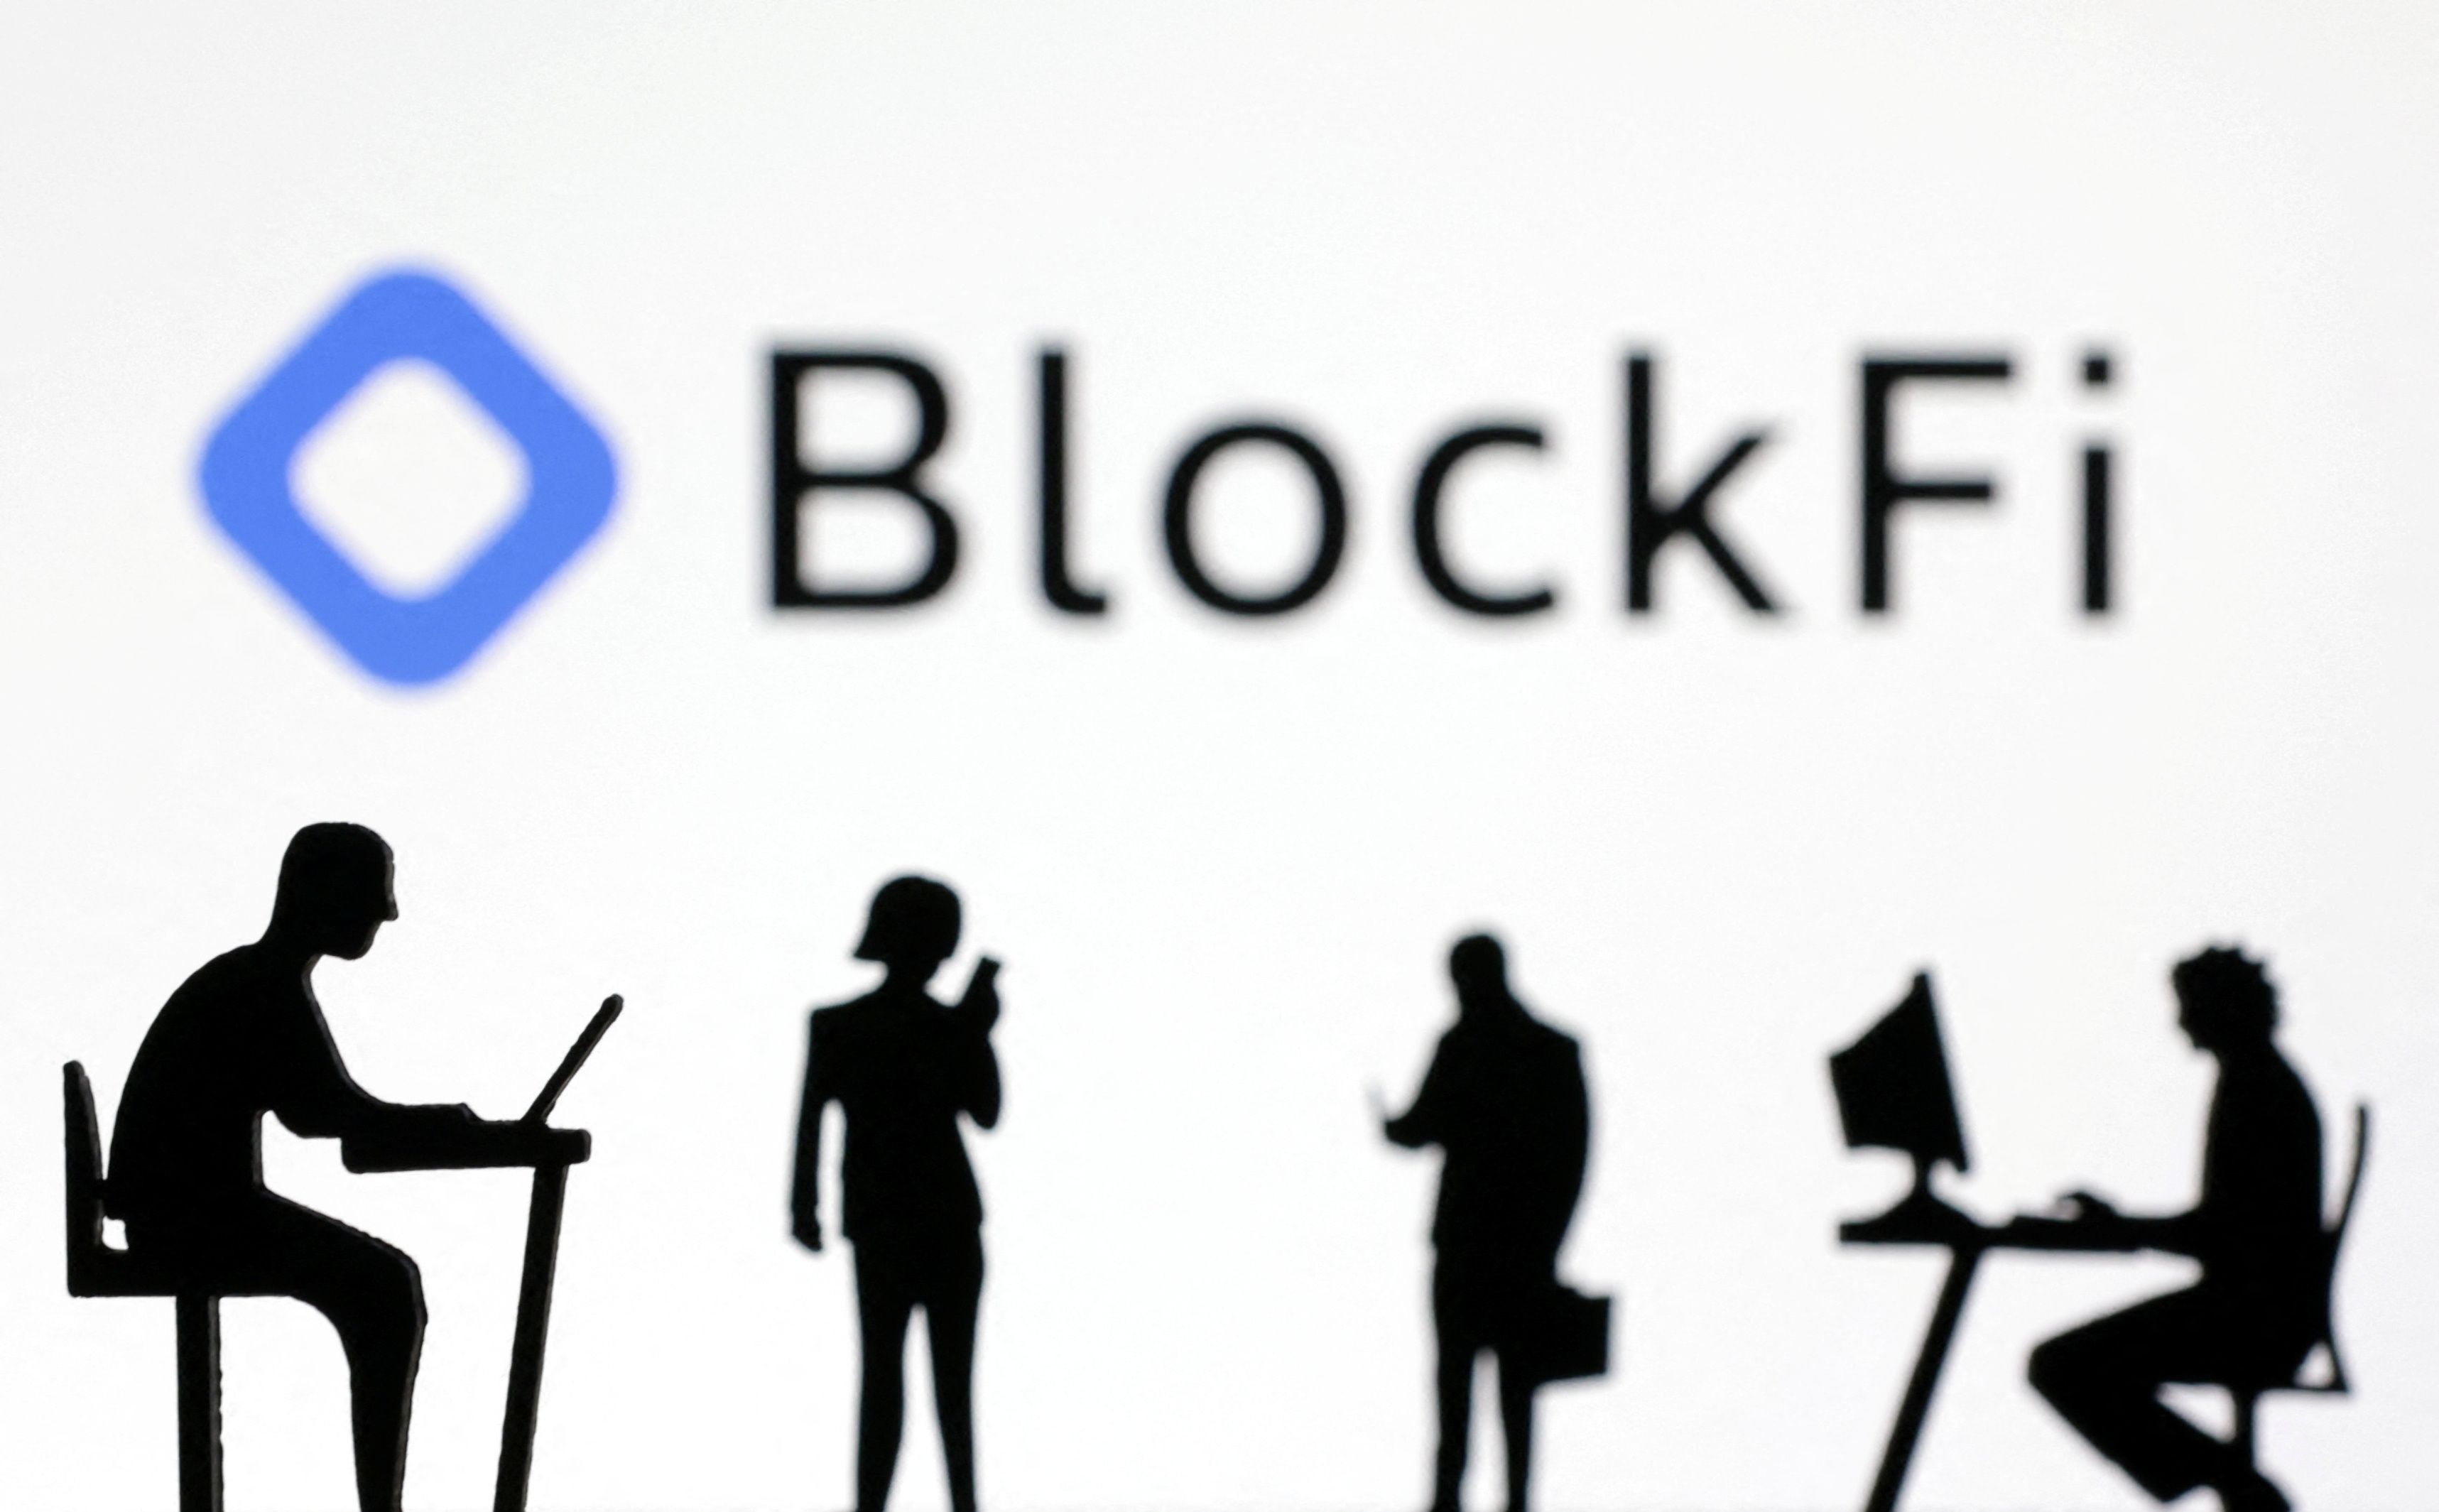 The illustration shows the BlockFi logo